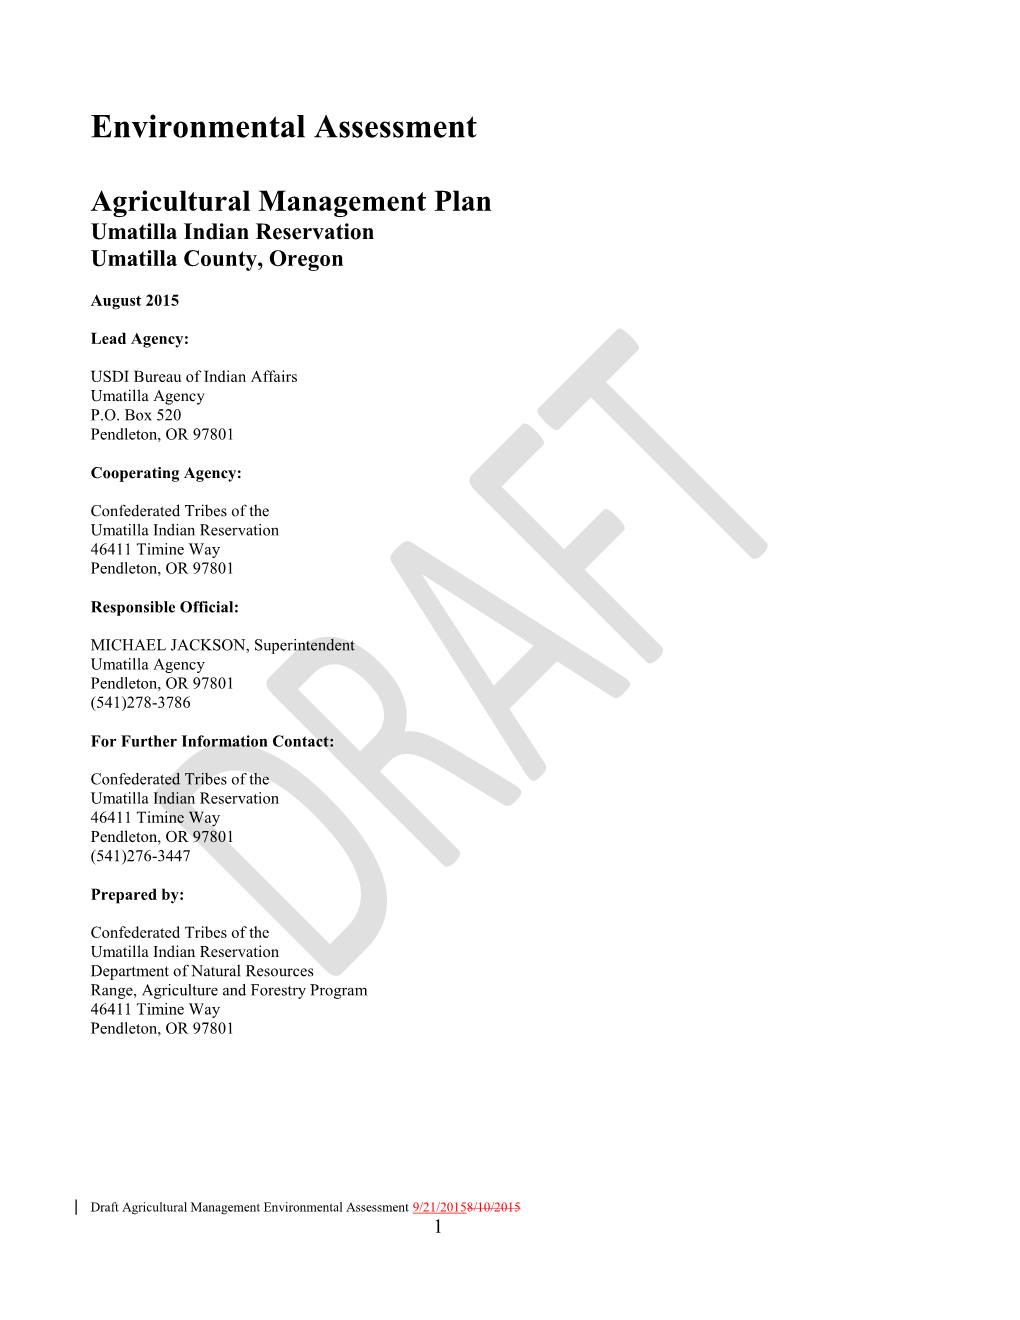 AG Management Plan